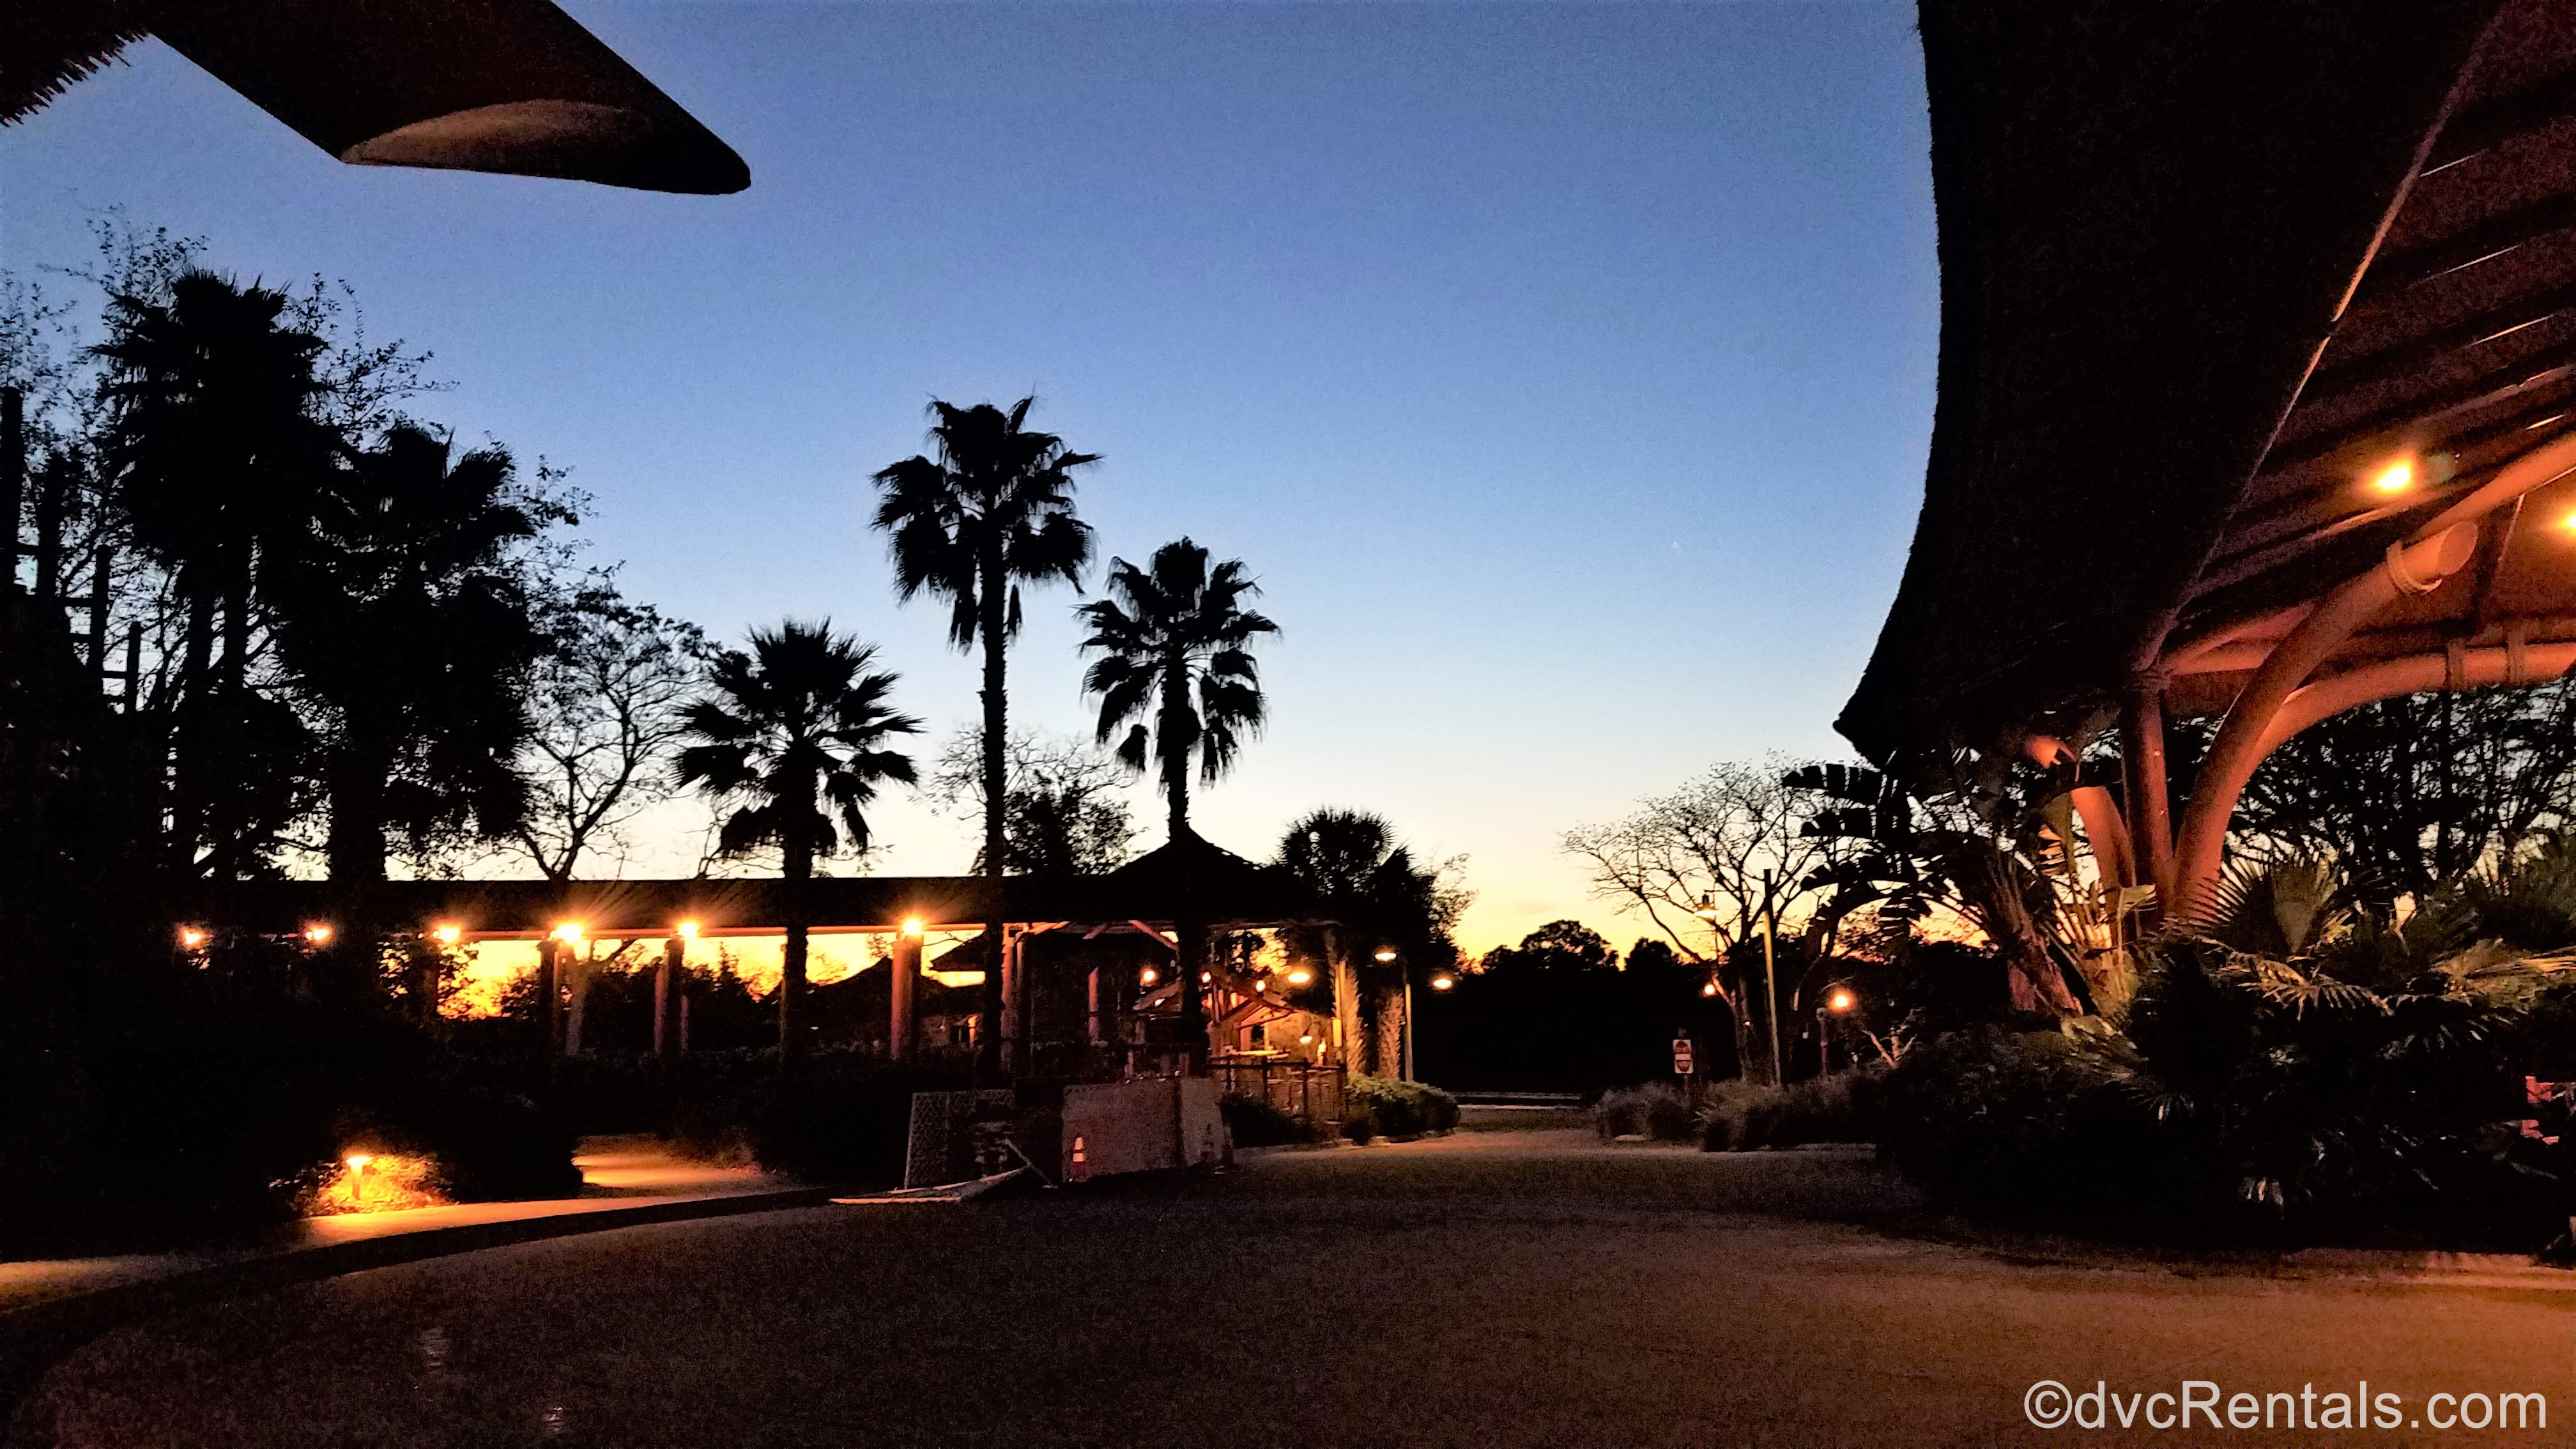 sunset over the entrance to Disney’s Animal Kingdom – Kidani Village